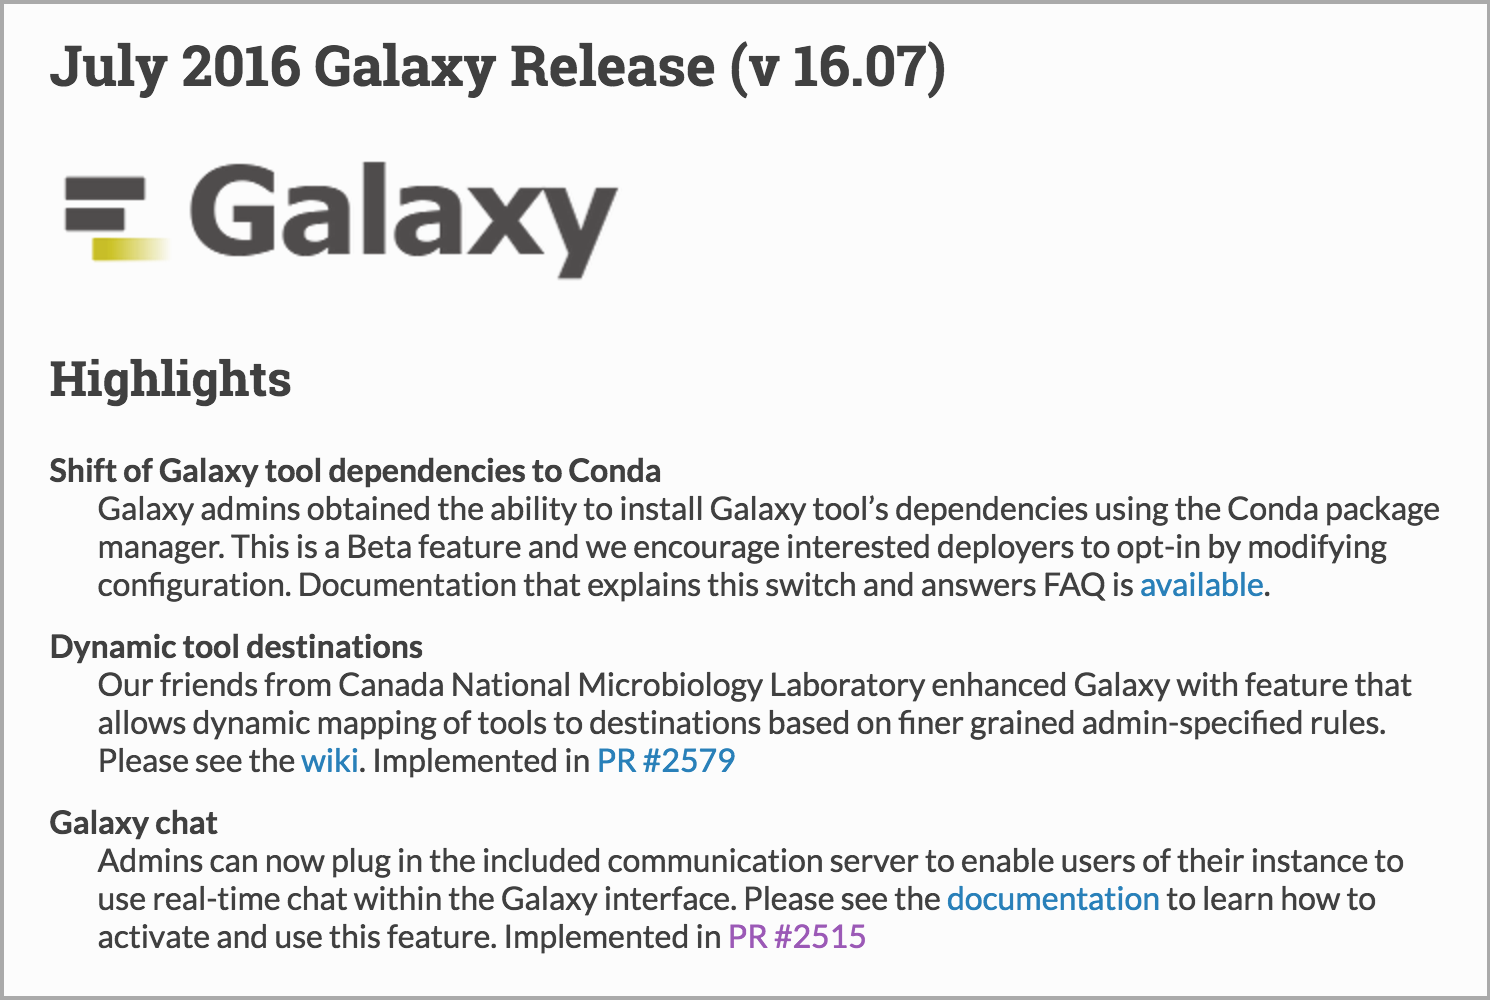 v16.07 Galaxy Release Highlights